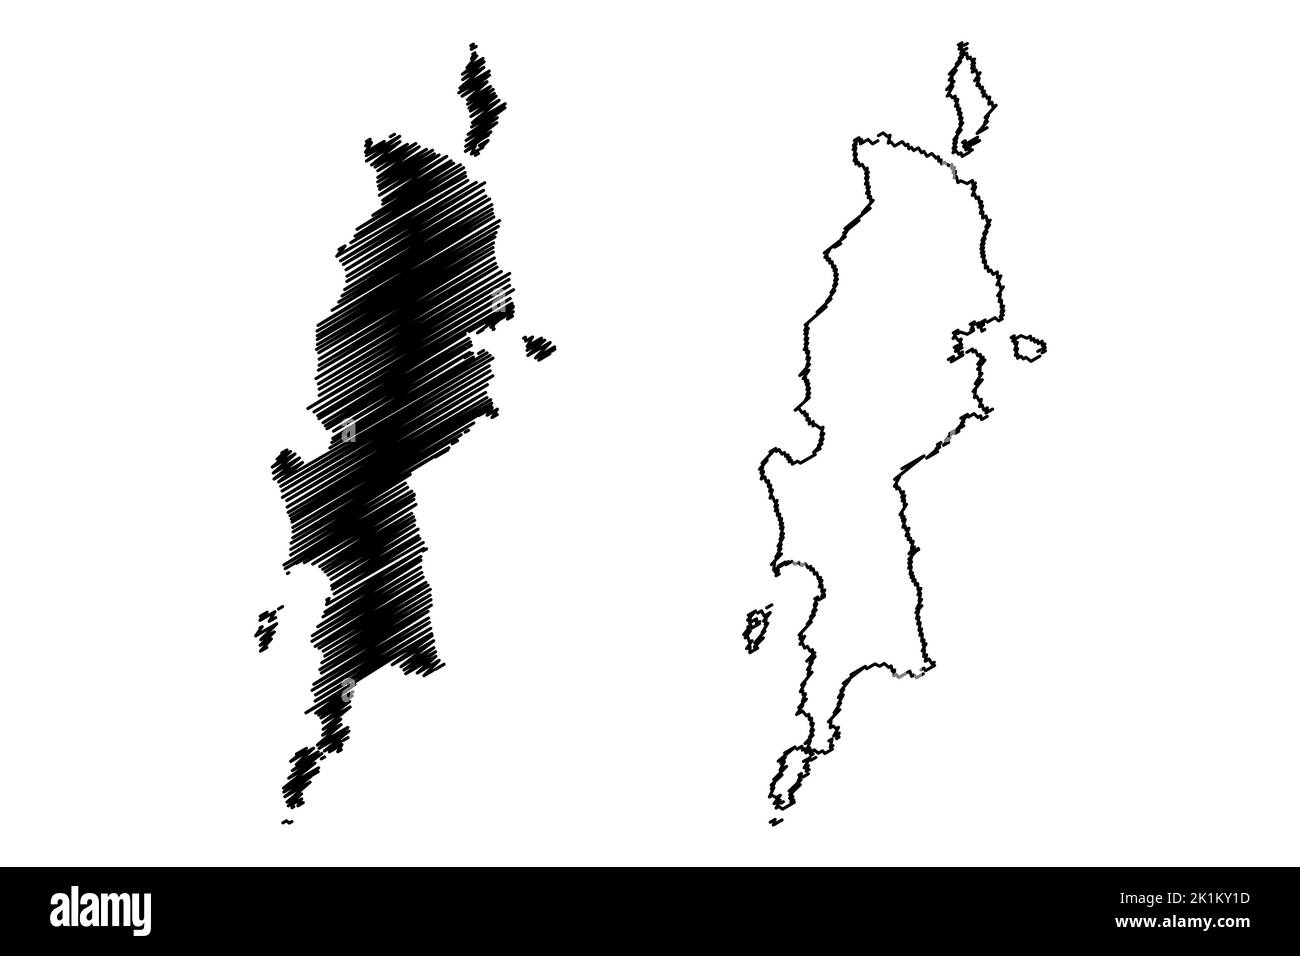 Tokashiki-Insel (Japan, Ostasien, japanischer Archipel, Kerama-Inseln) Kartenvektordarstellung, Scribble-Skizze Tugaifigai-Karte Stock Vektor